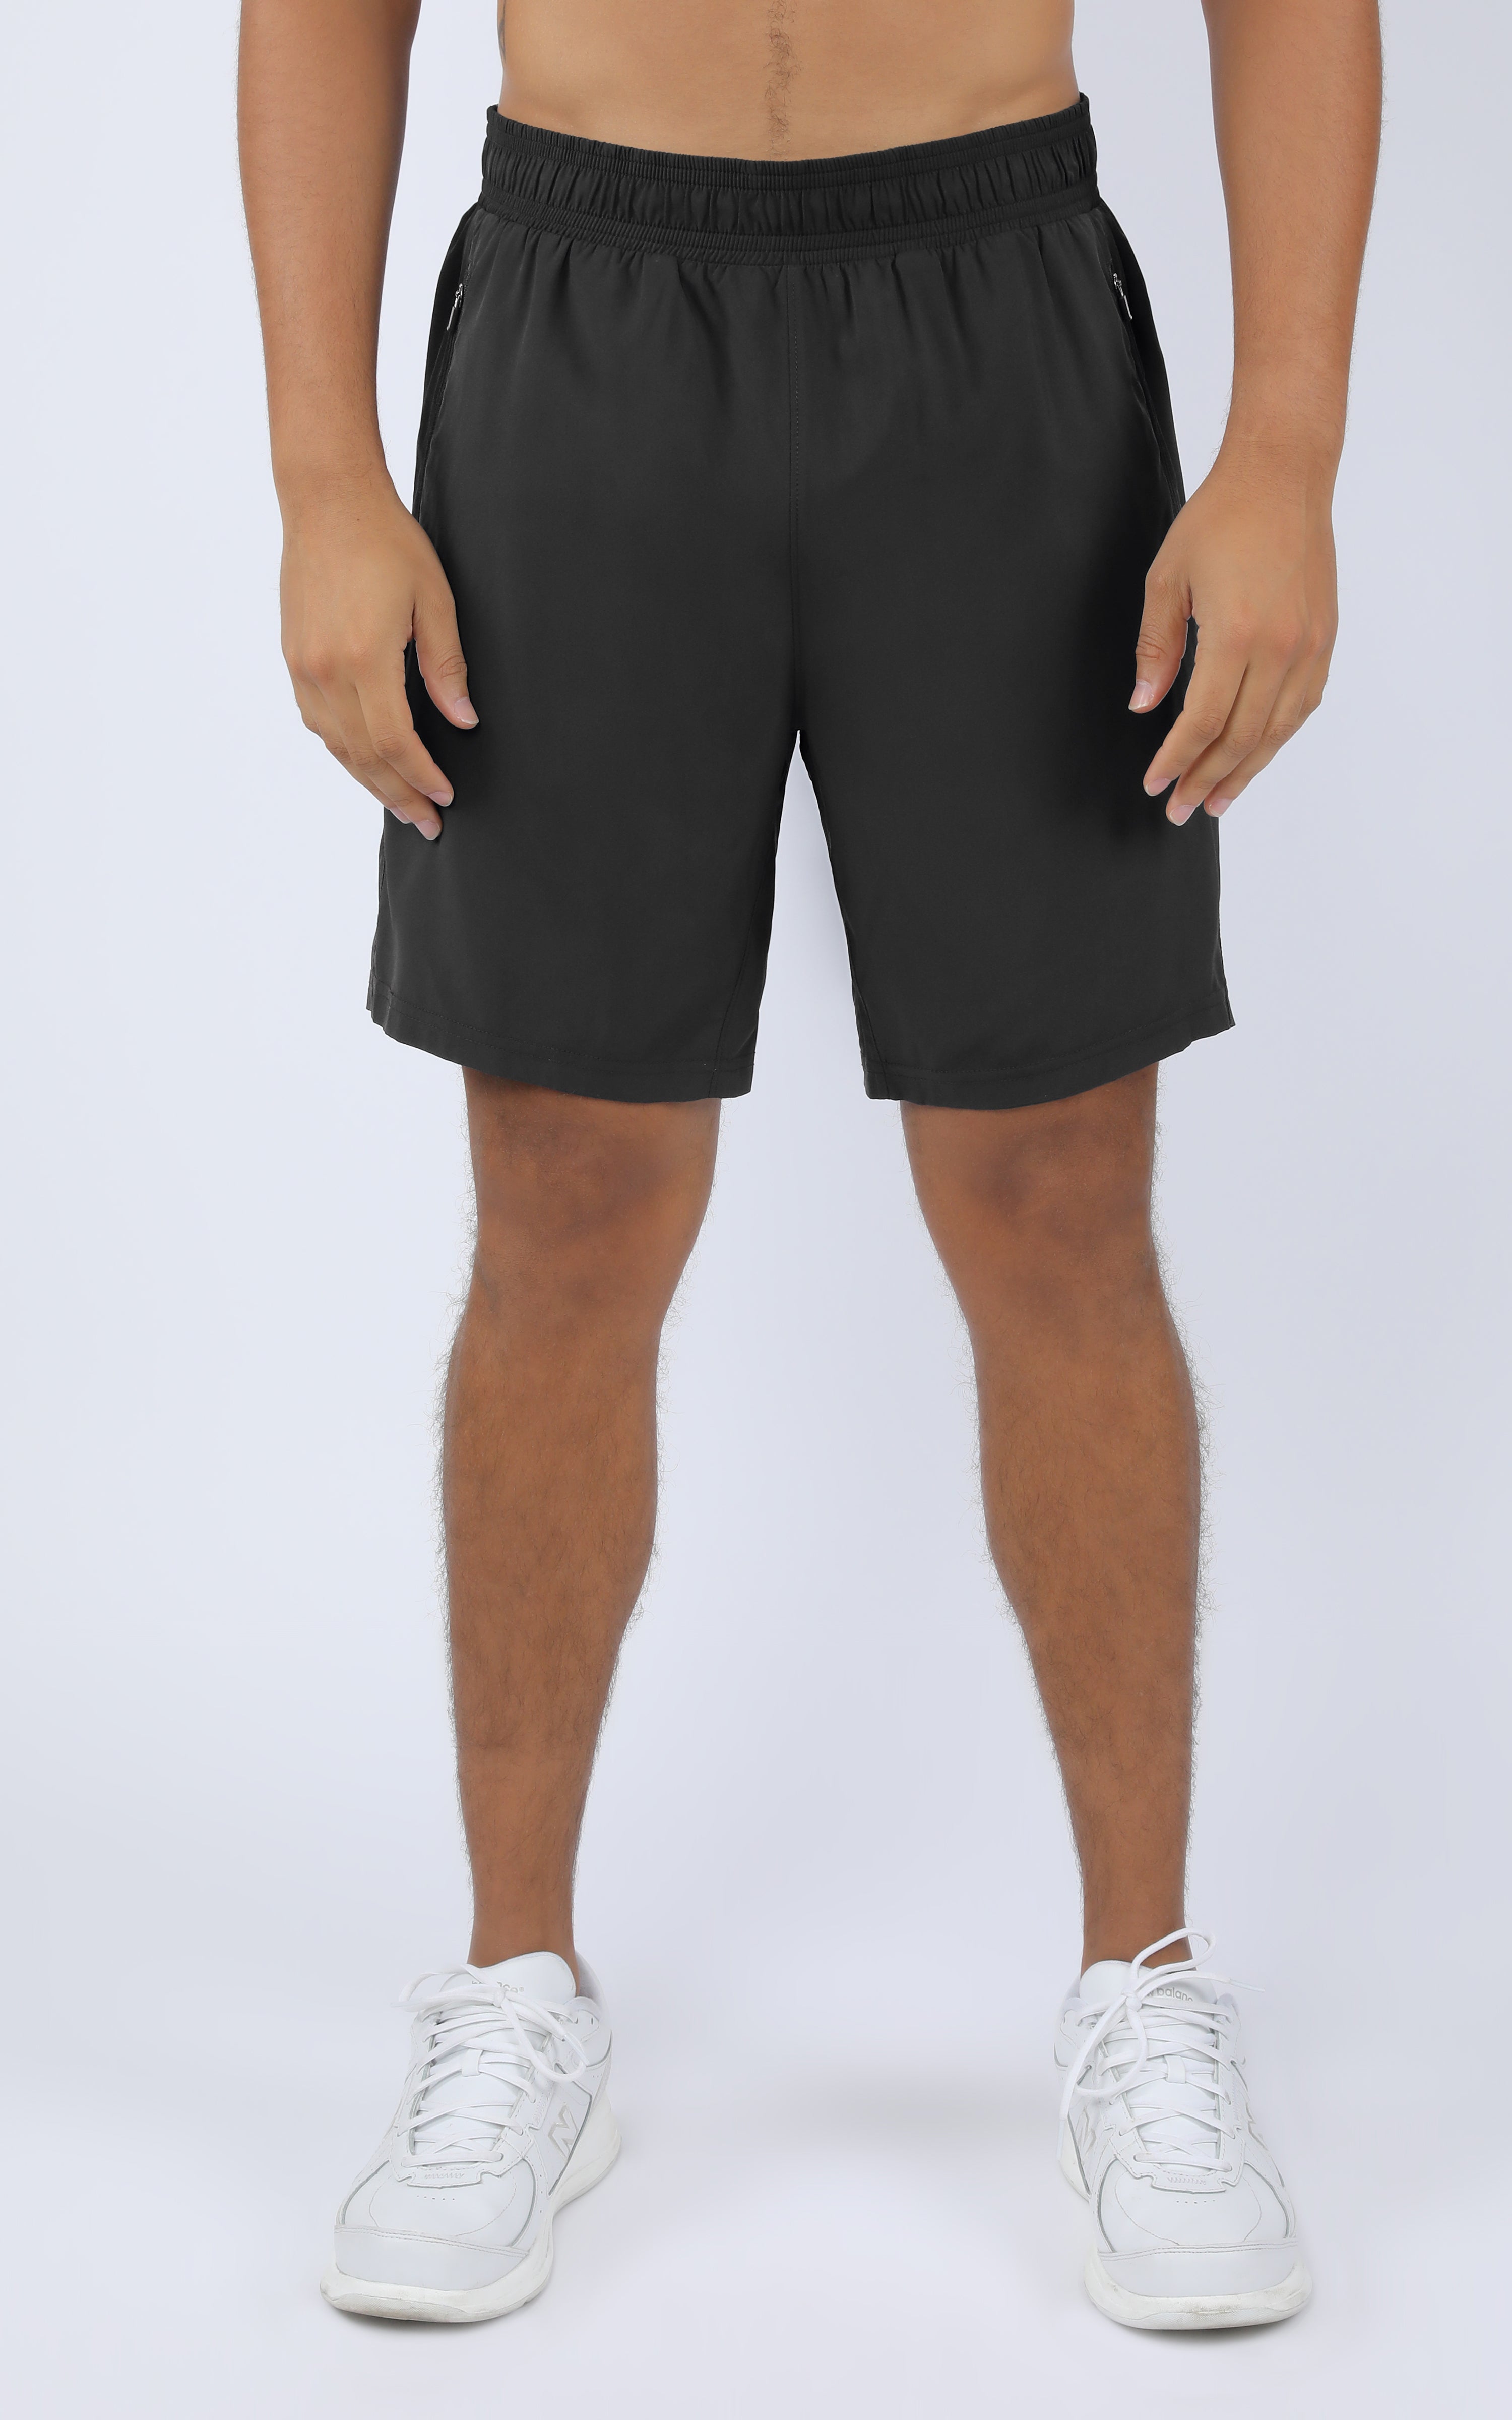 Mens Woven Shorts with Zipper Pockets - SHM33441 – 90 Degree by Reflex